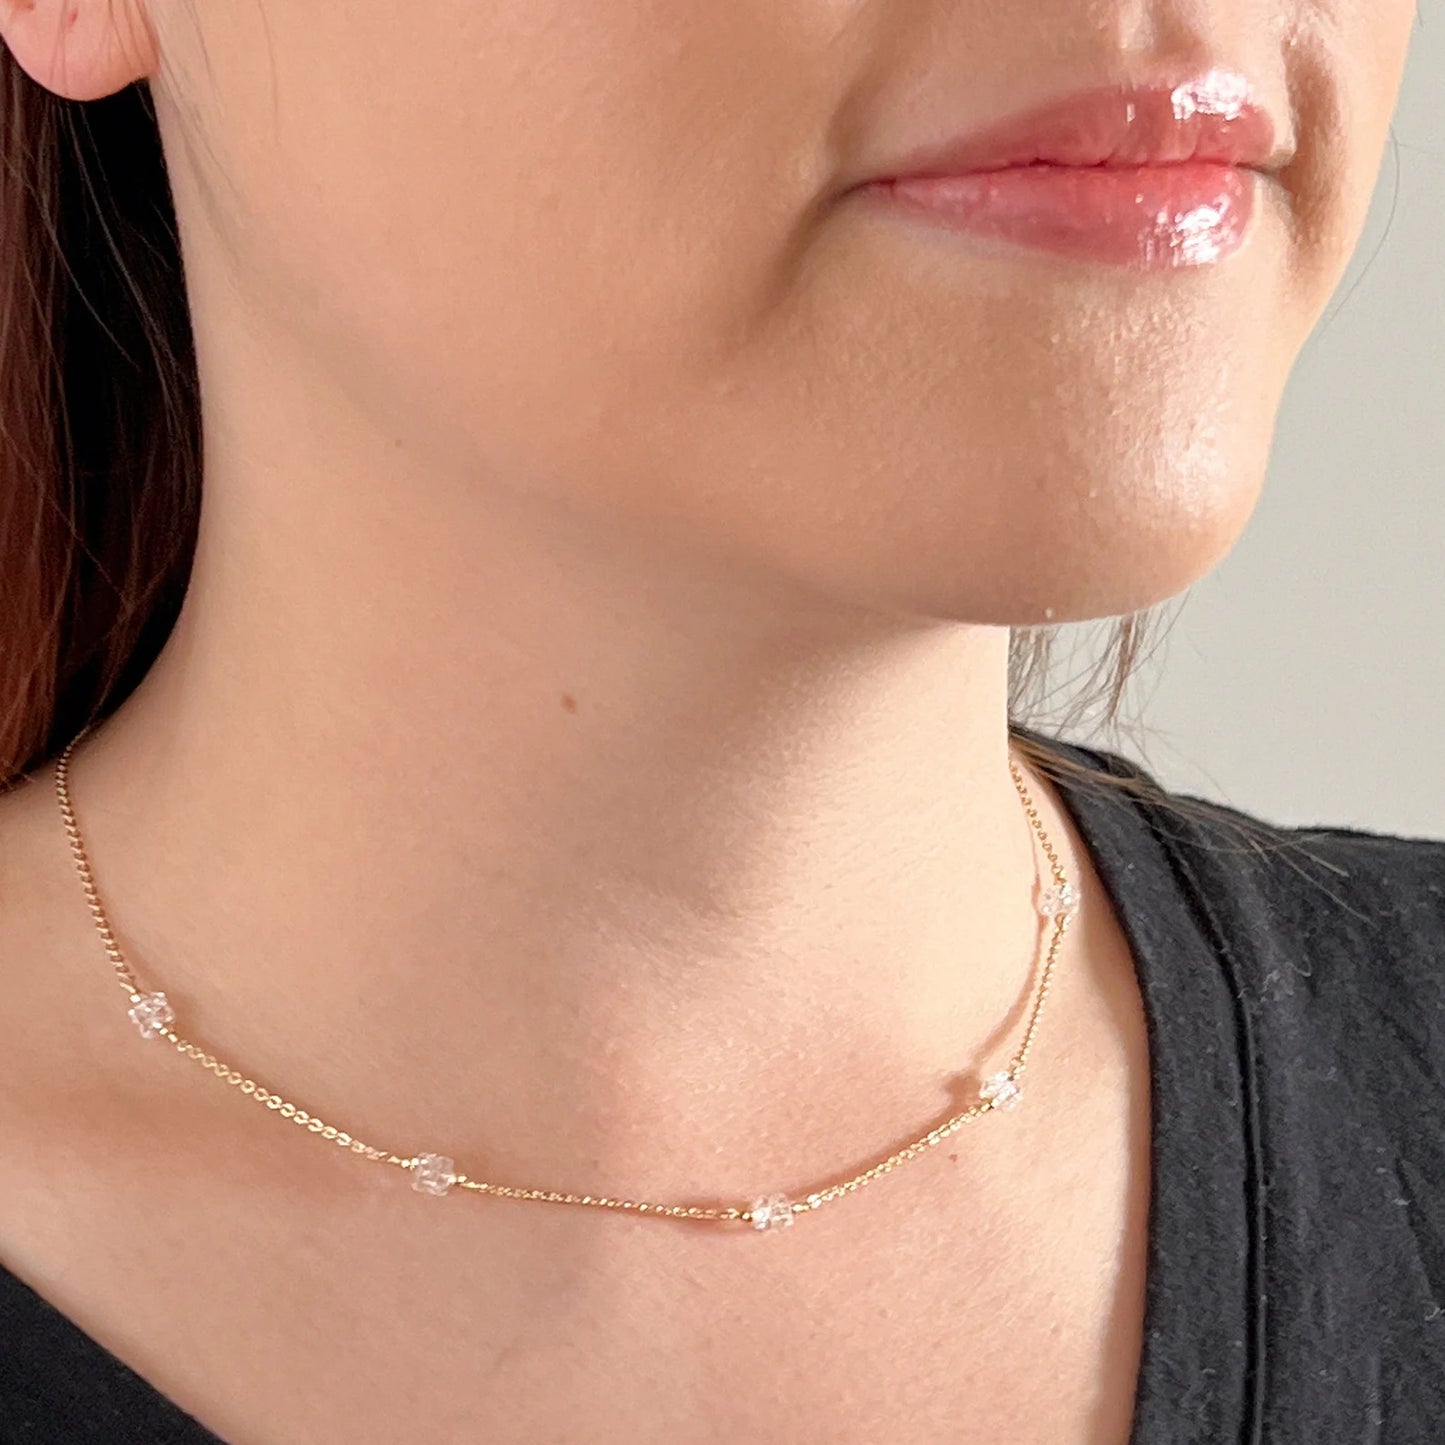 Herkimer Diamond Necklace - April Birthstone